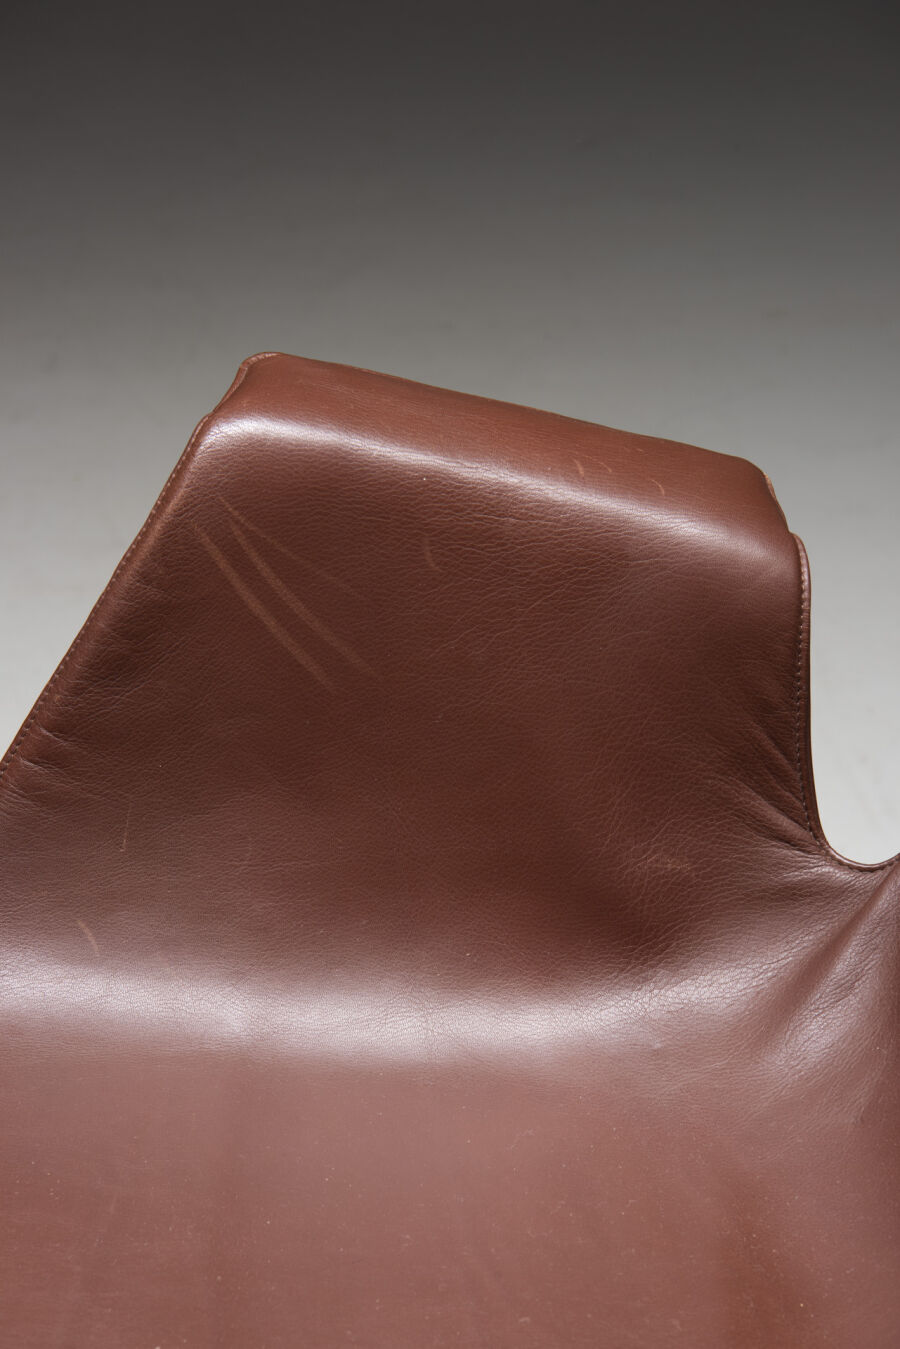 3036fabricius-kastholmdesk-chair-brown-leather-13